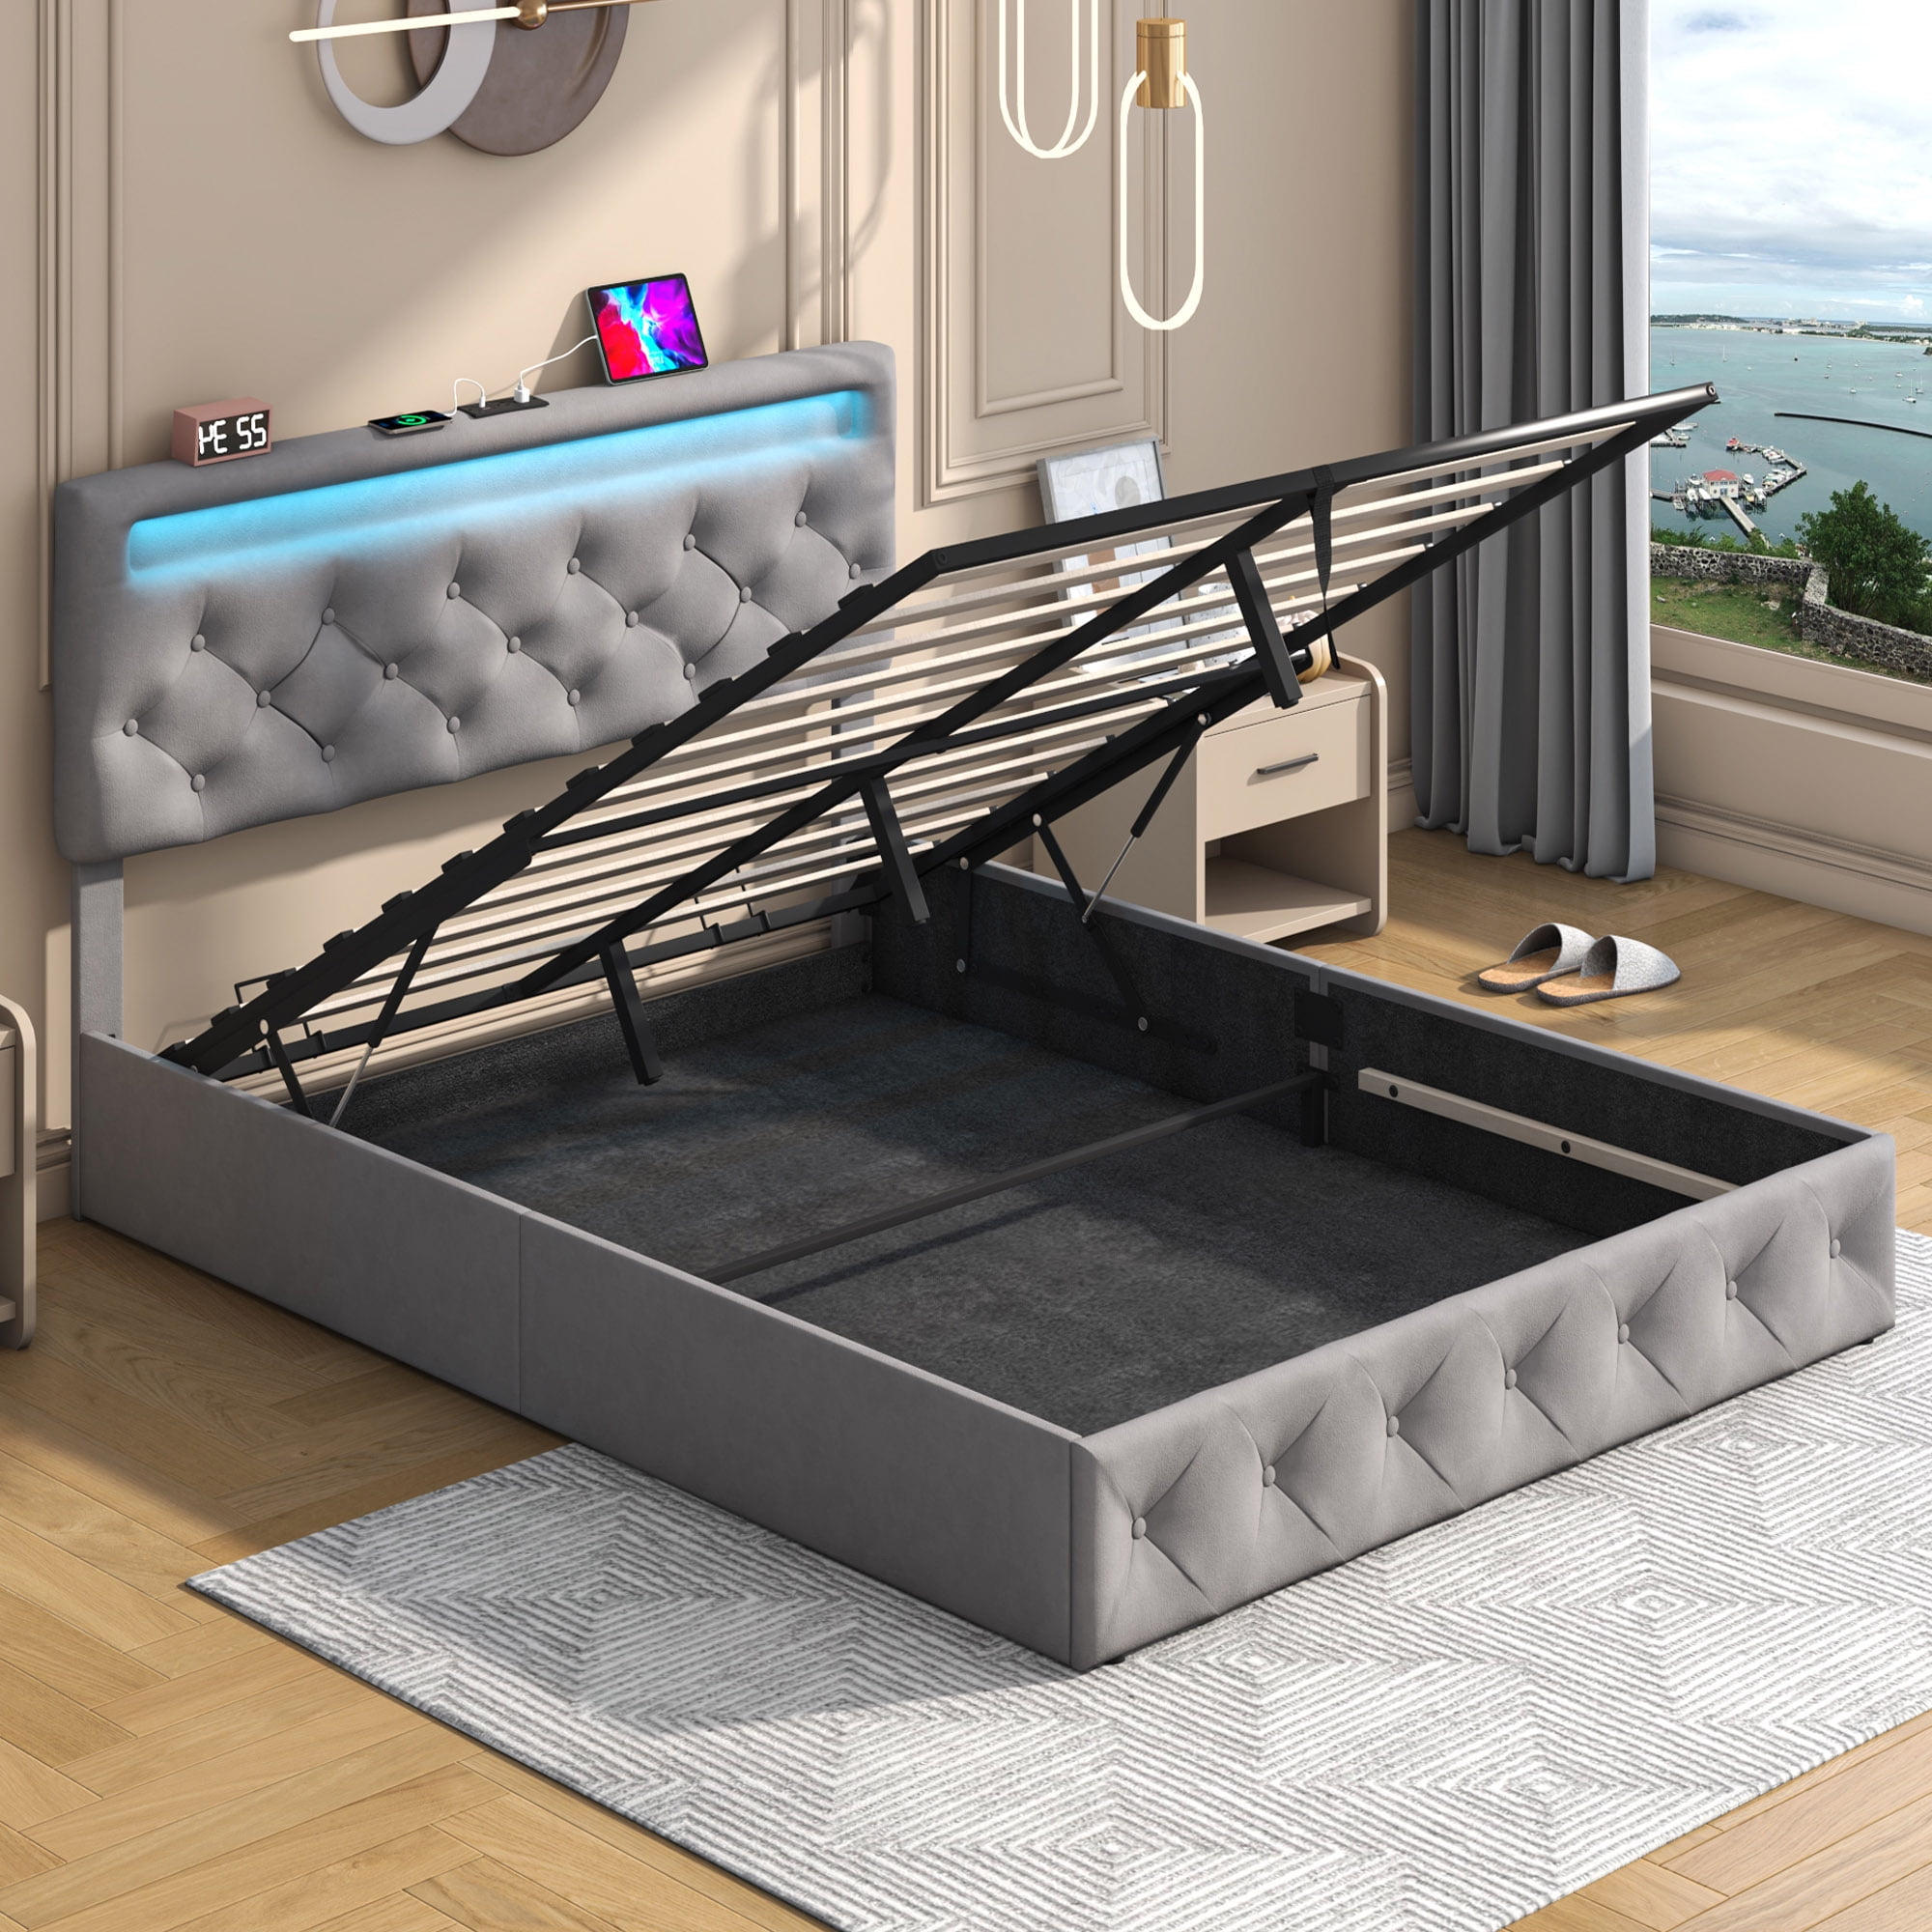 Queen Lift Up Bed Frame with LED Light & Power Outlets, Velvet Storage Bed with Adjustable Headboard, Upholstered Platform Bed(Beige-Queen)